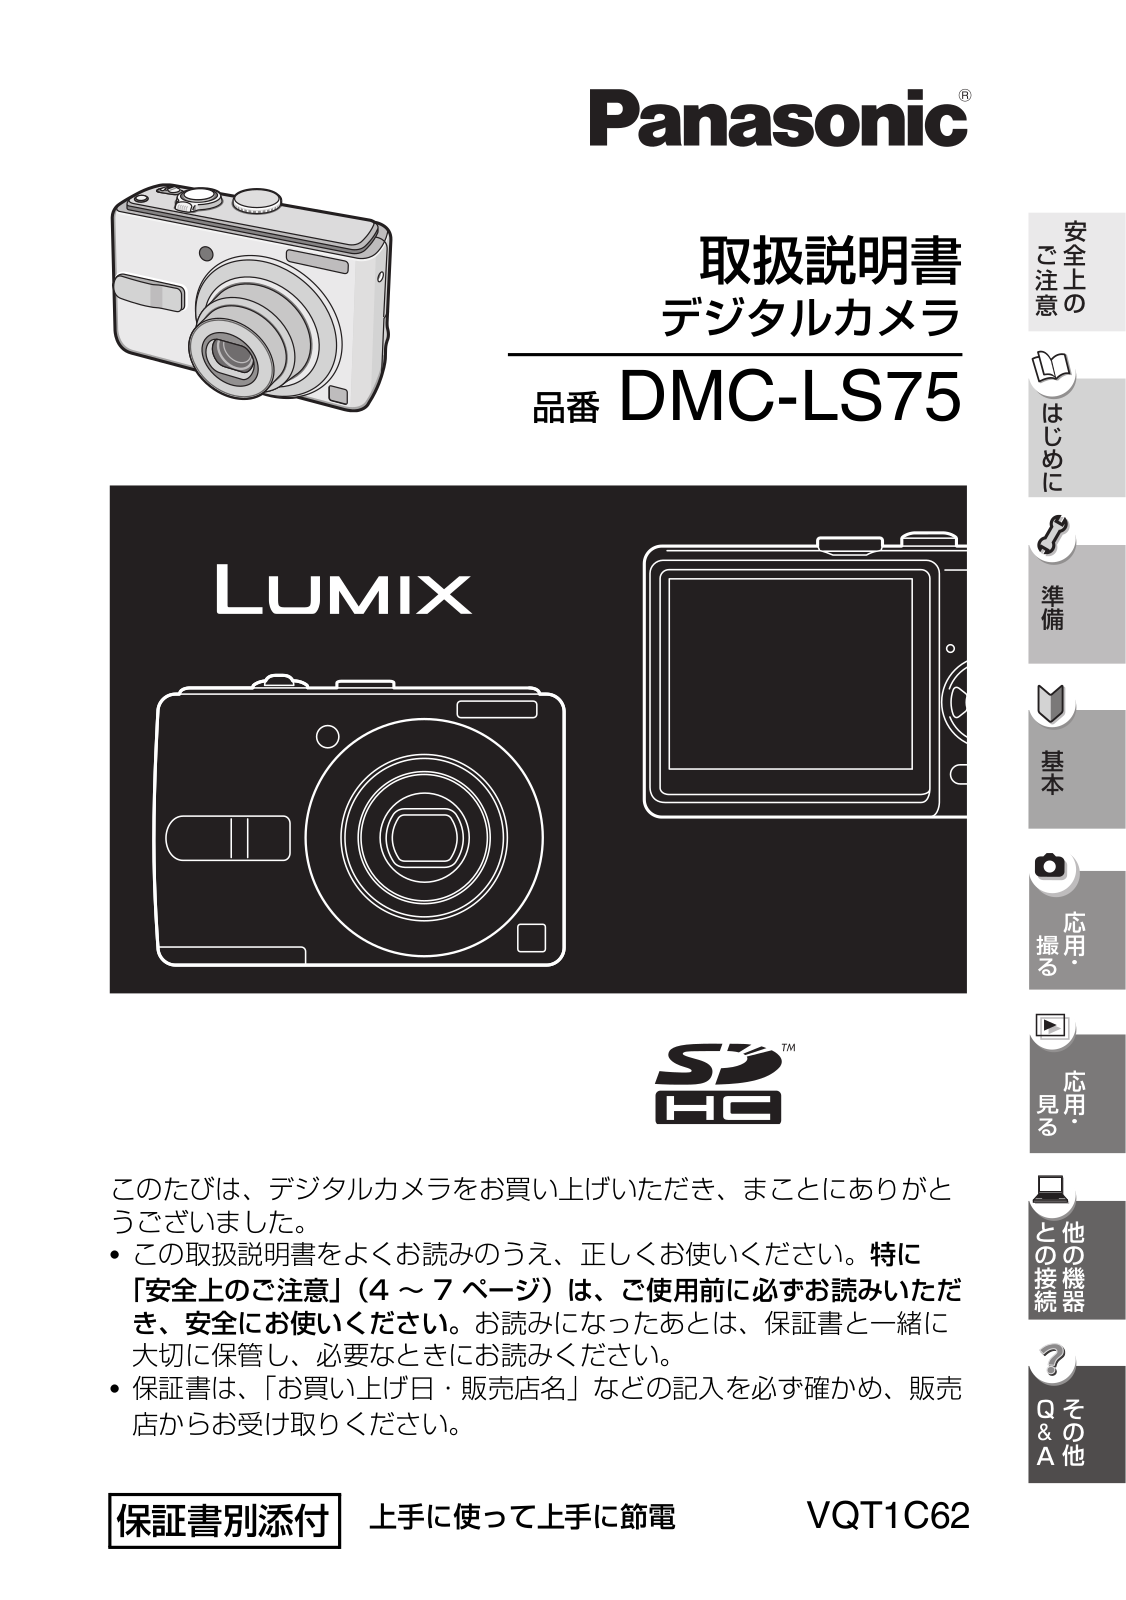 Panasonic LUMIX DMC-LS75 User Manual